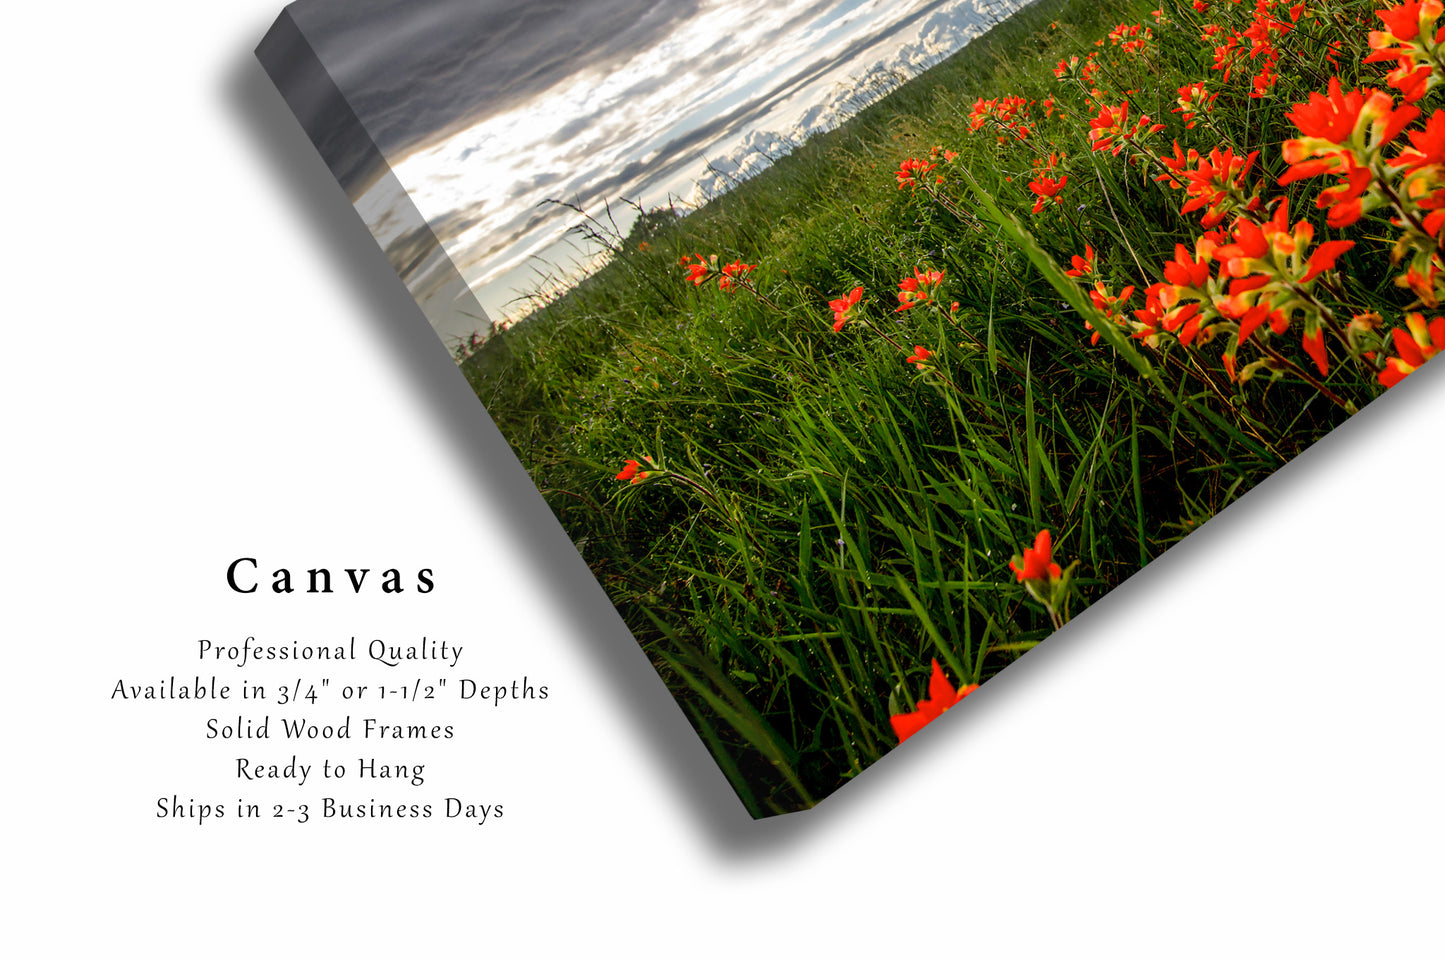 Wildflower Canvas Print | Indian Paintbrush Wall Art | Oklahoma Photography | Flower Photo | Nature Decor